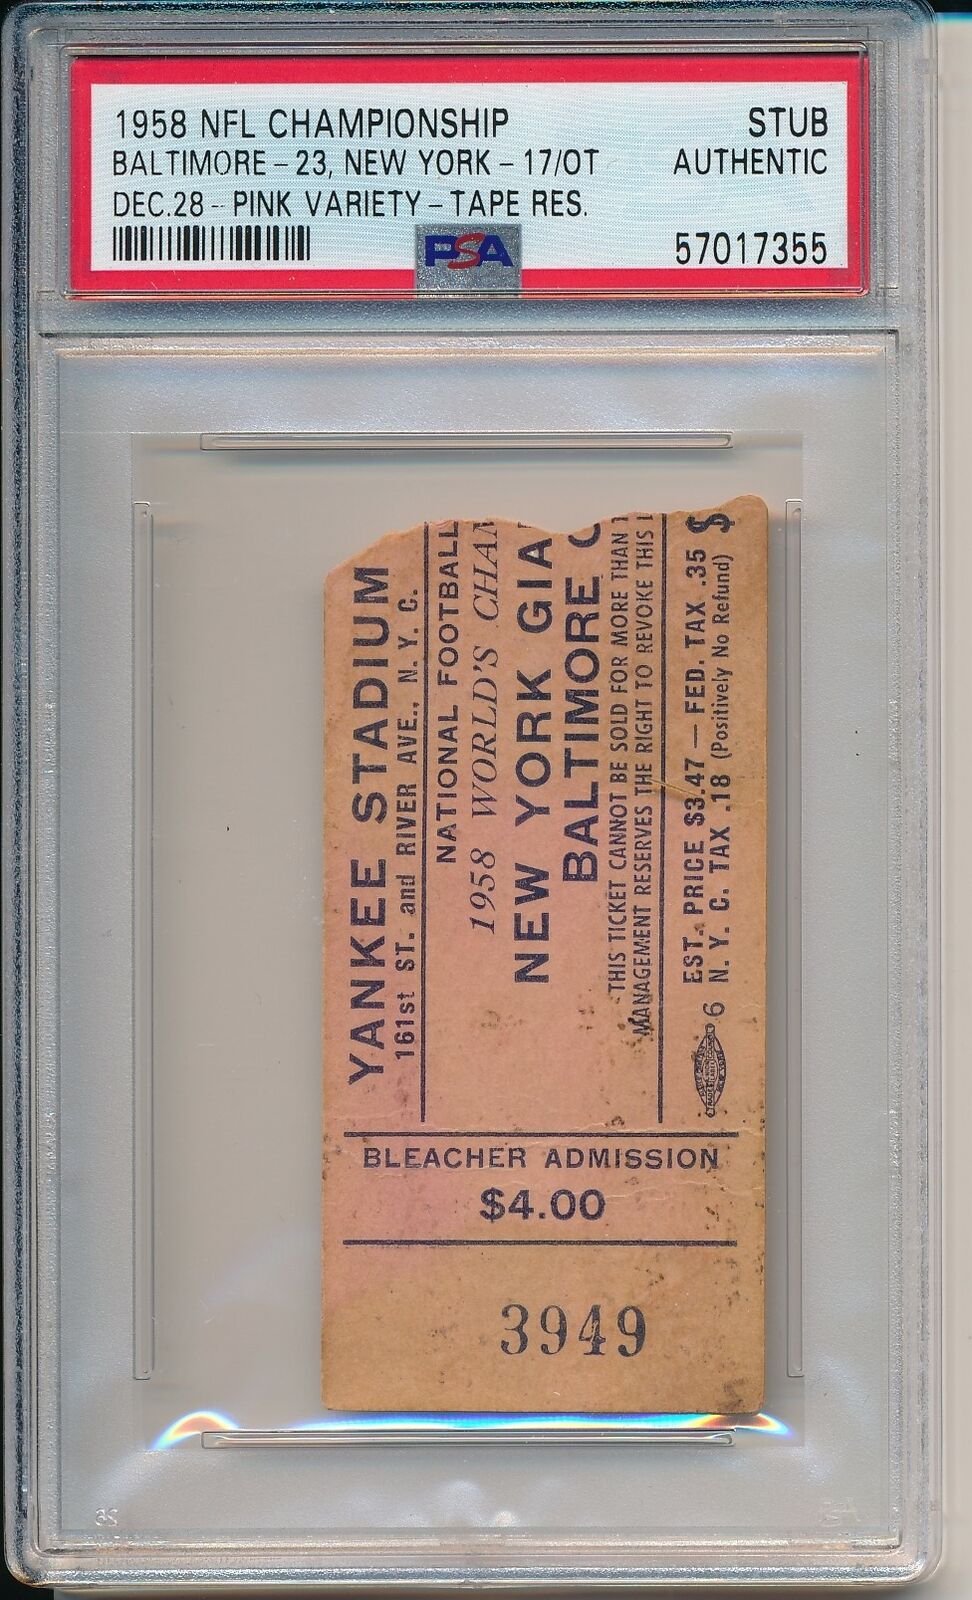 1958 Nfl Championship Giants Vs. Colts At Yankee Stadium Ticket Stub Psa 159755